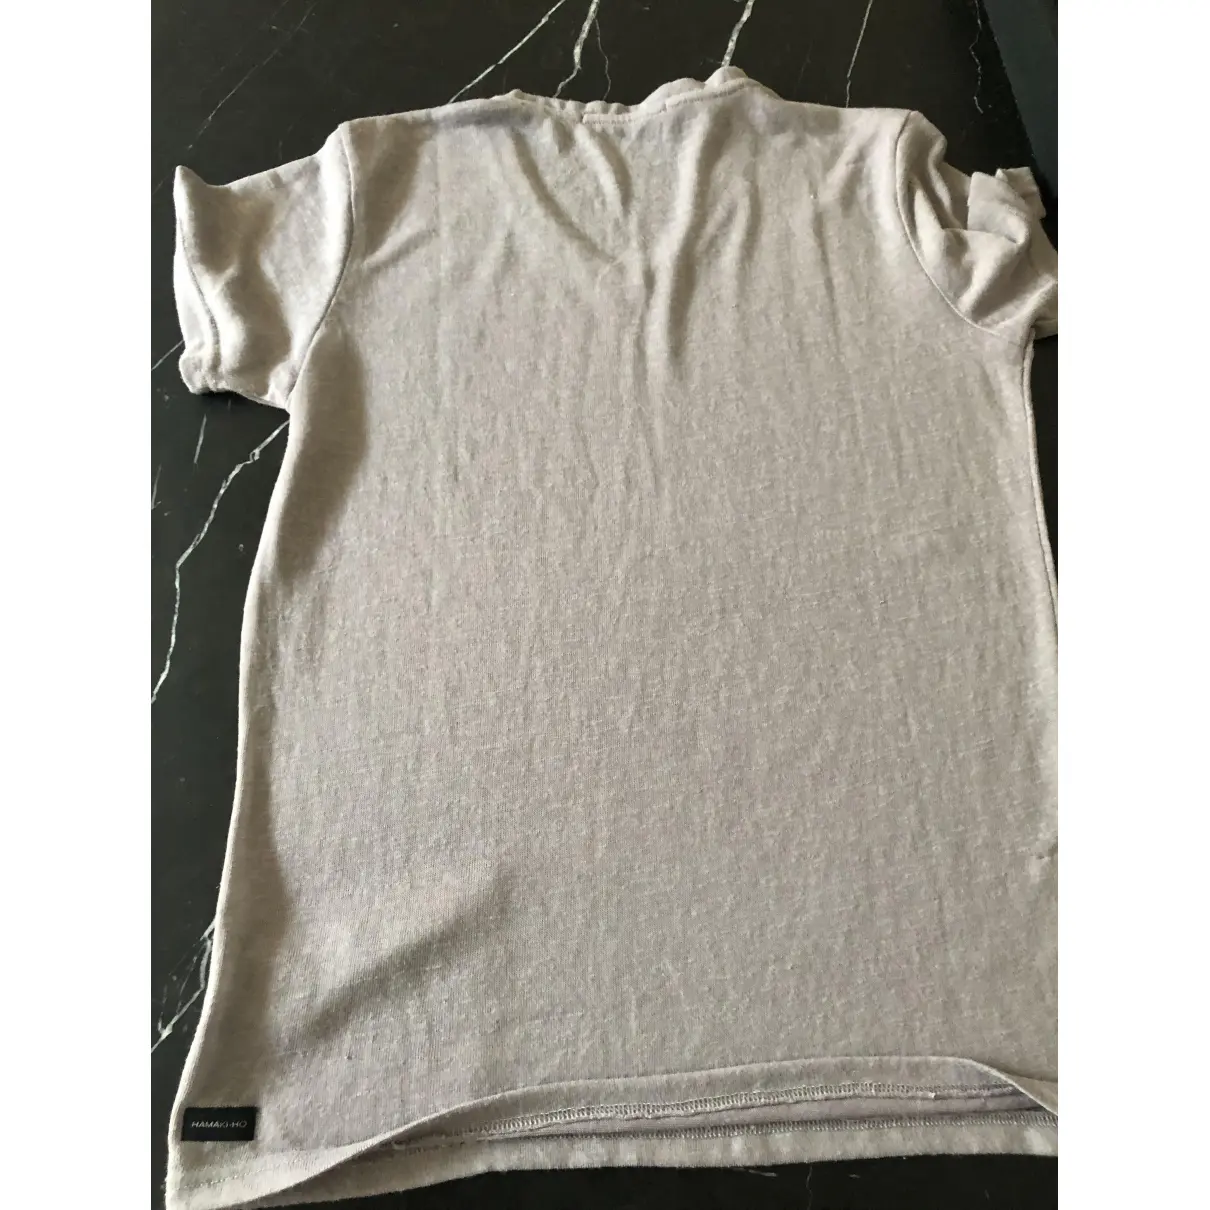 Buy Hamaki-Ho Linen t-shirt online